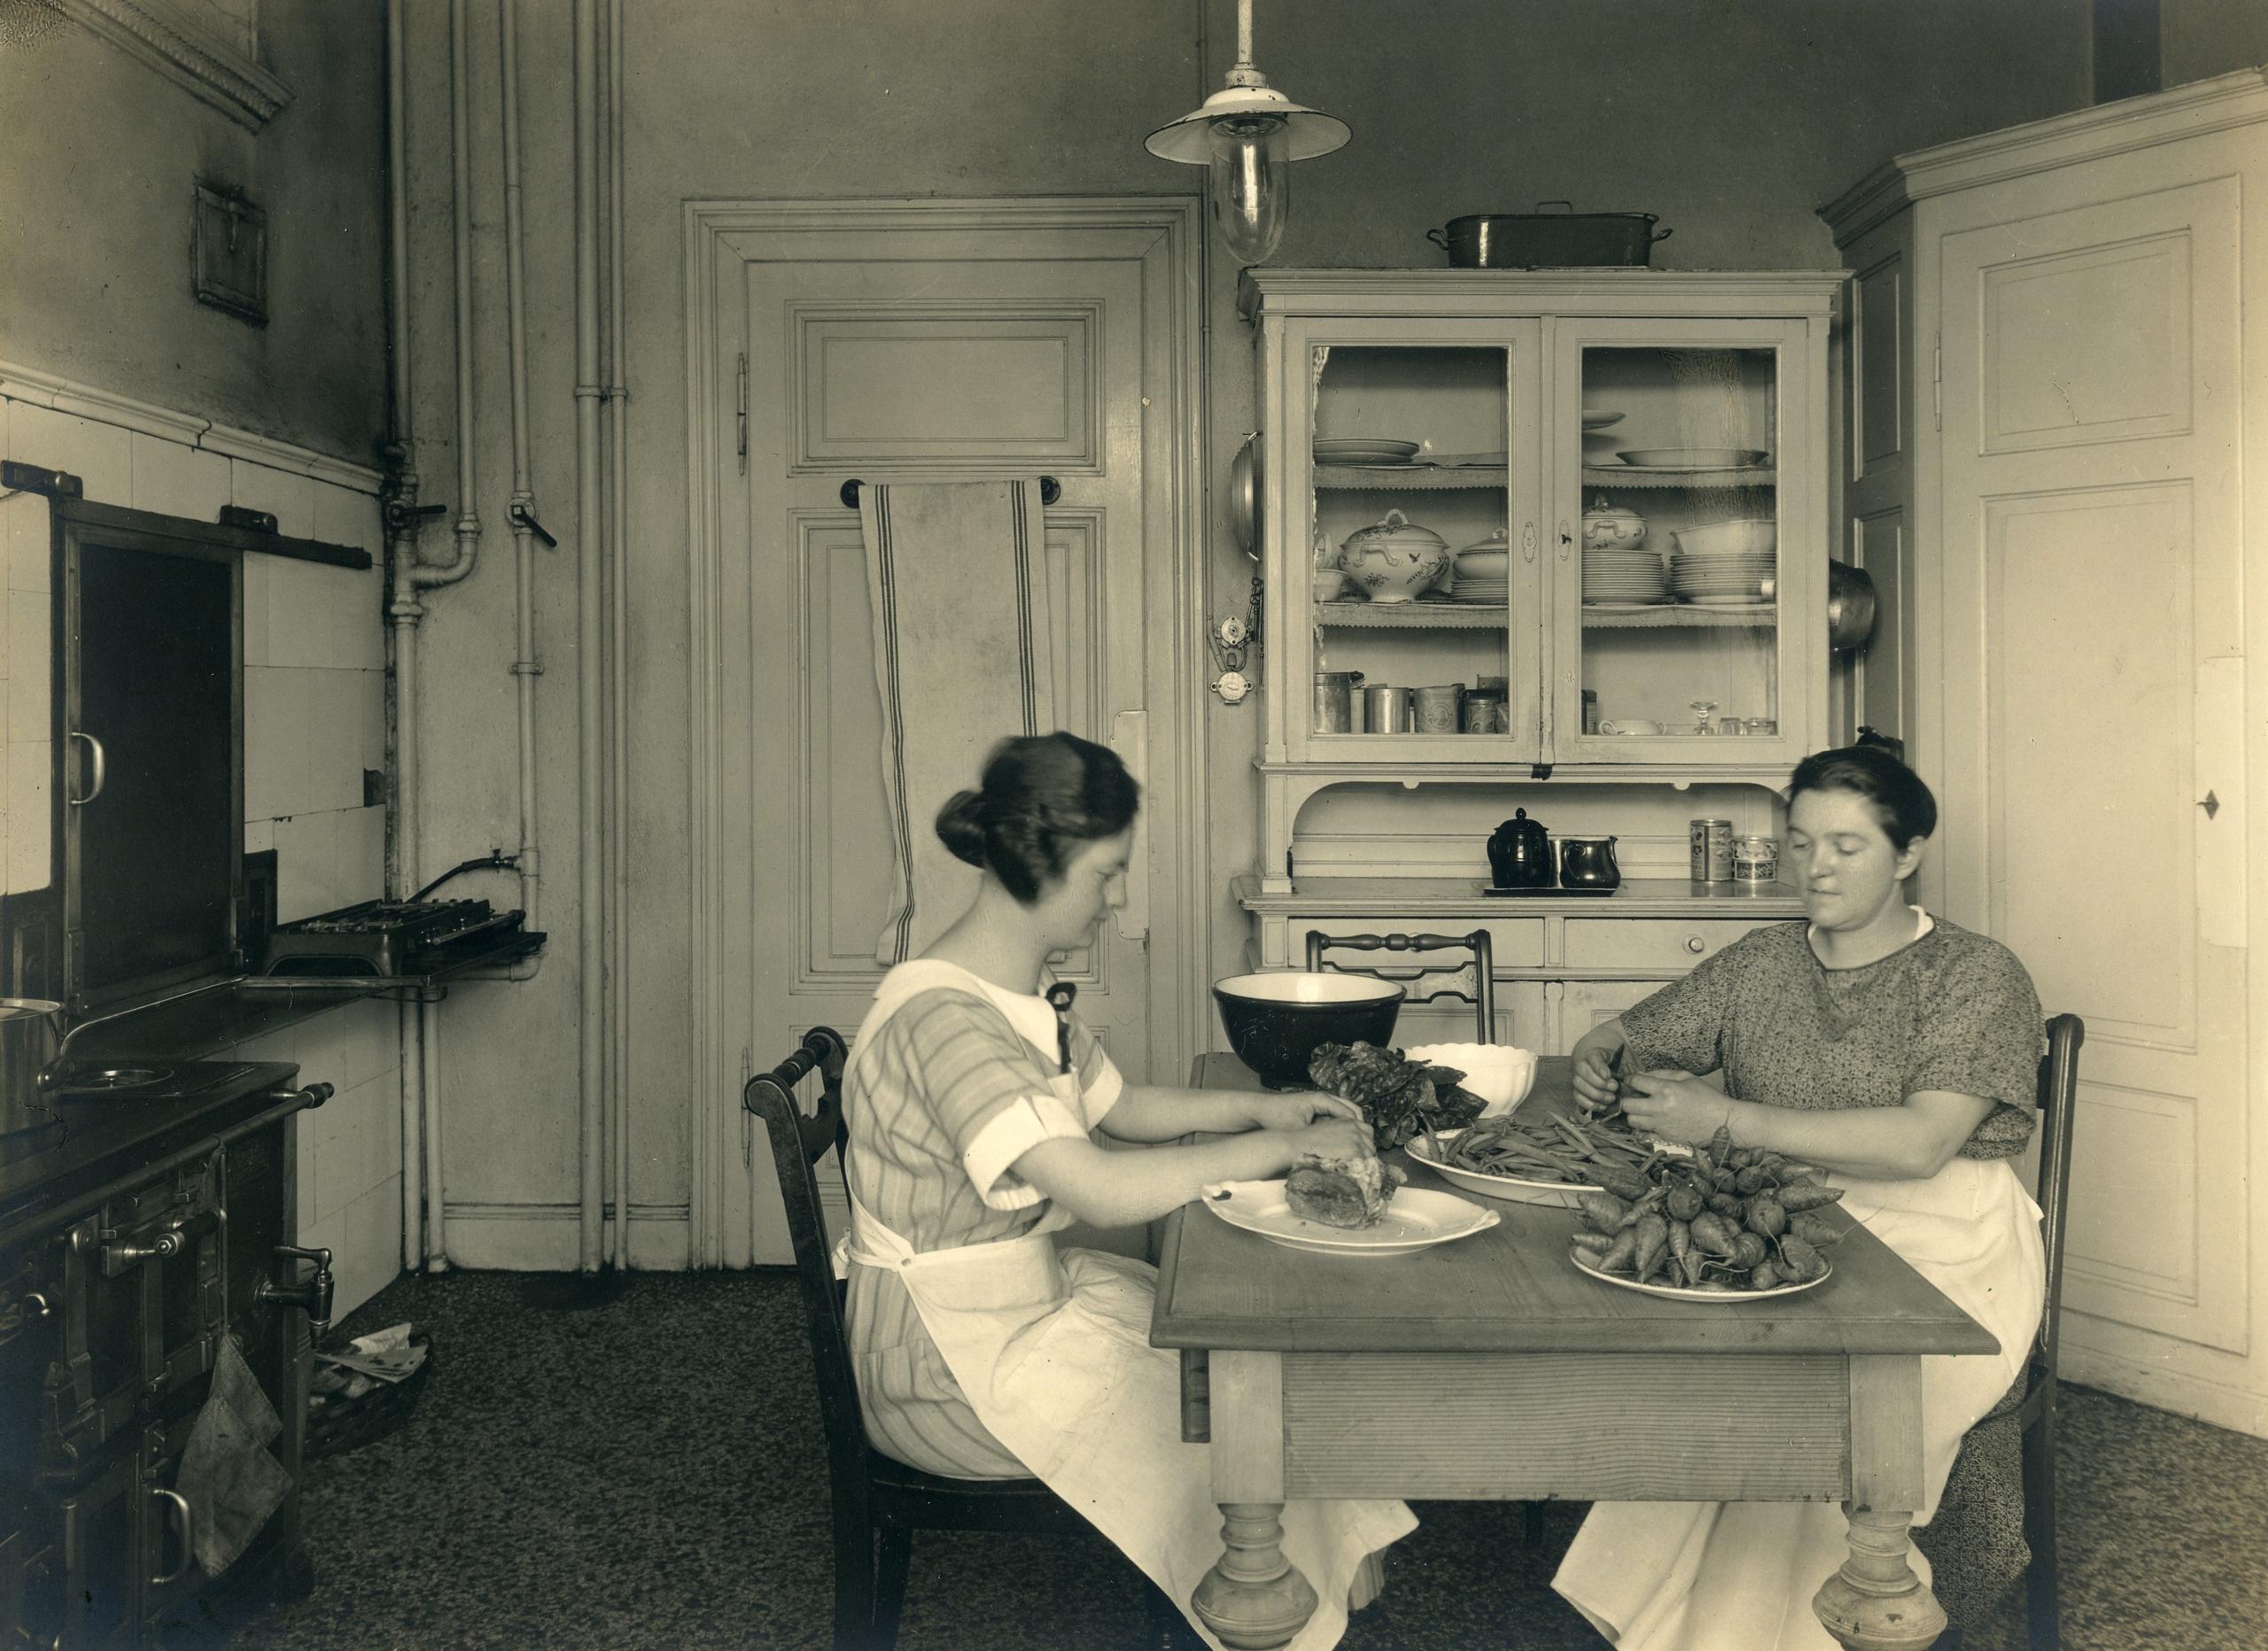 Dos mujeres sentadas cortando verduras